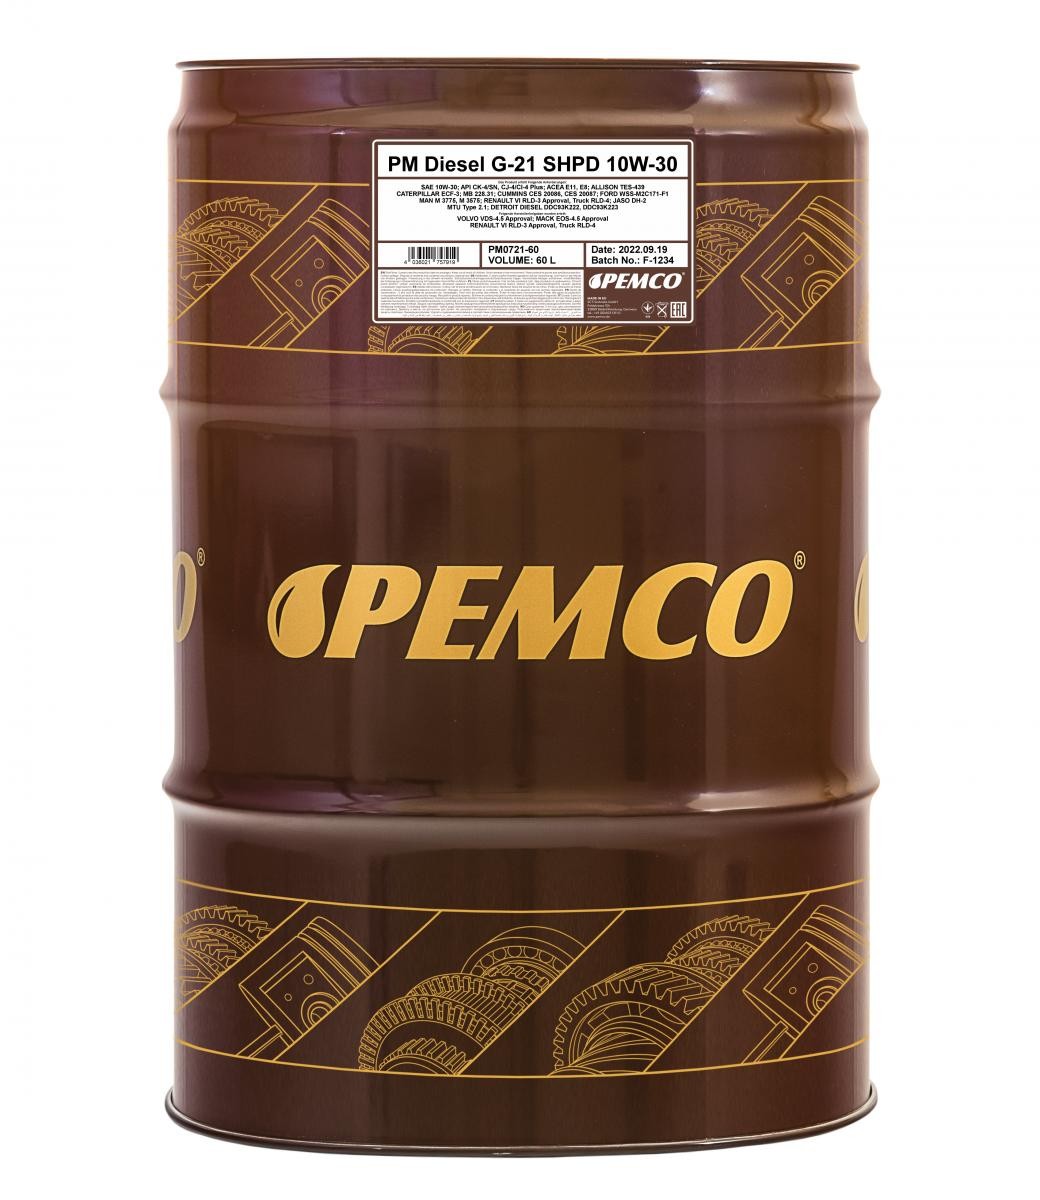 PEMCO Truck SHPD, DIESEL G-21 PM0721-60 Engine oil 10W-30, 60l, Part Synthetic Oil